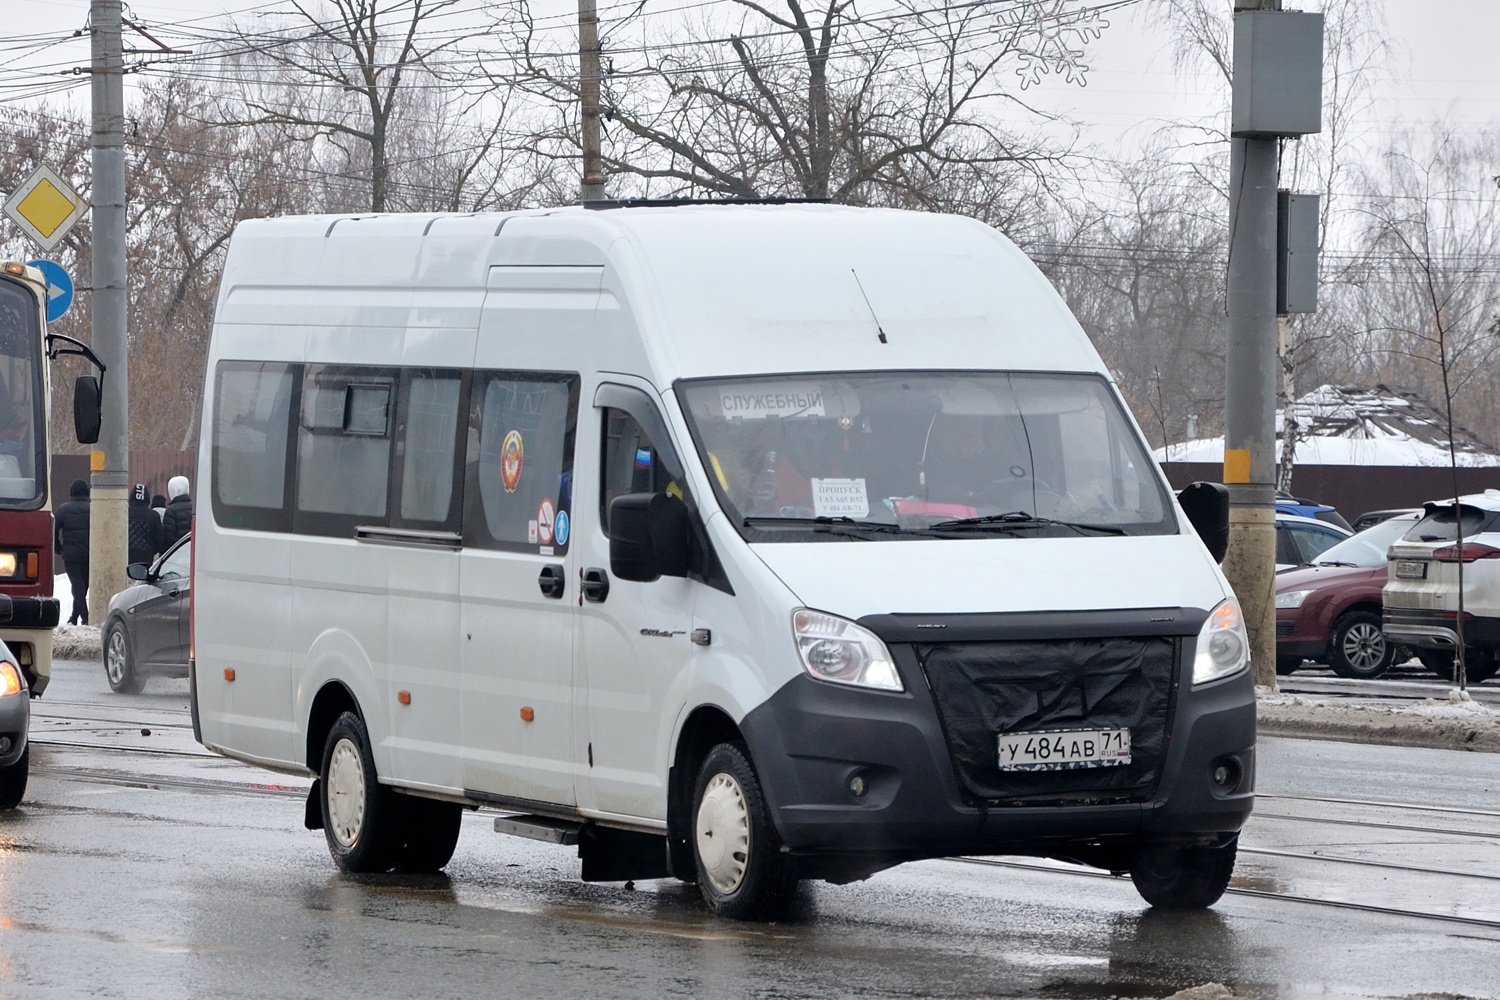 Tula, ГАЗ-A65R52 Next # У 484 АВ 71